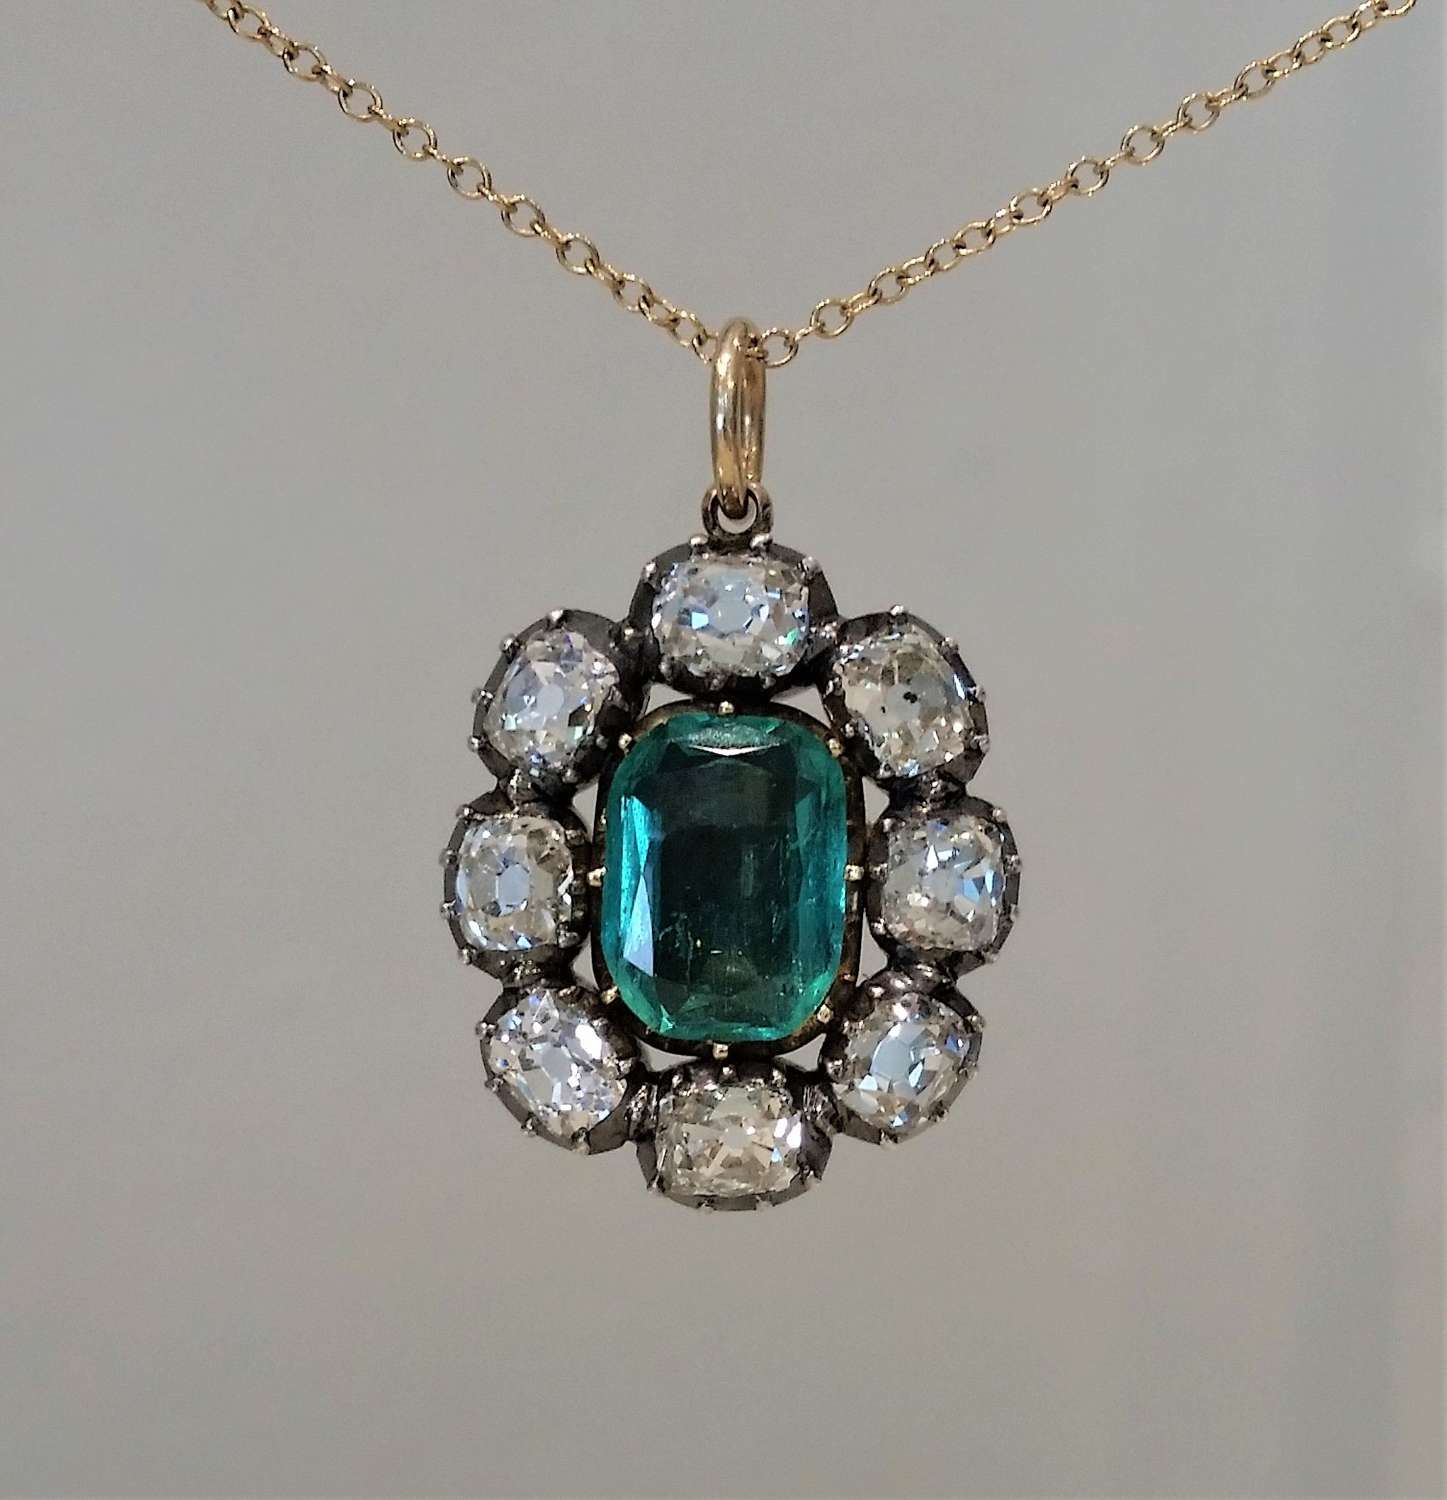 Emerald and diamond cluster pendant late 18th century